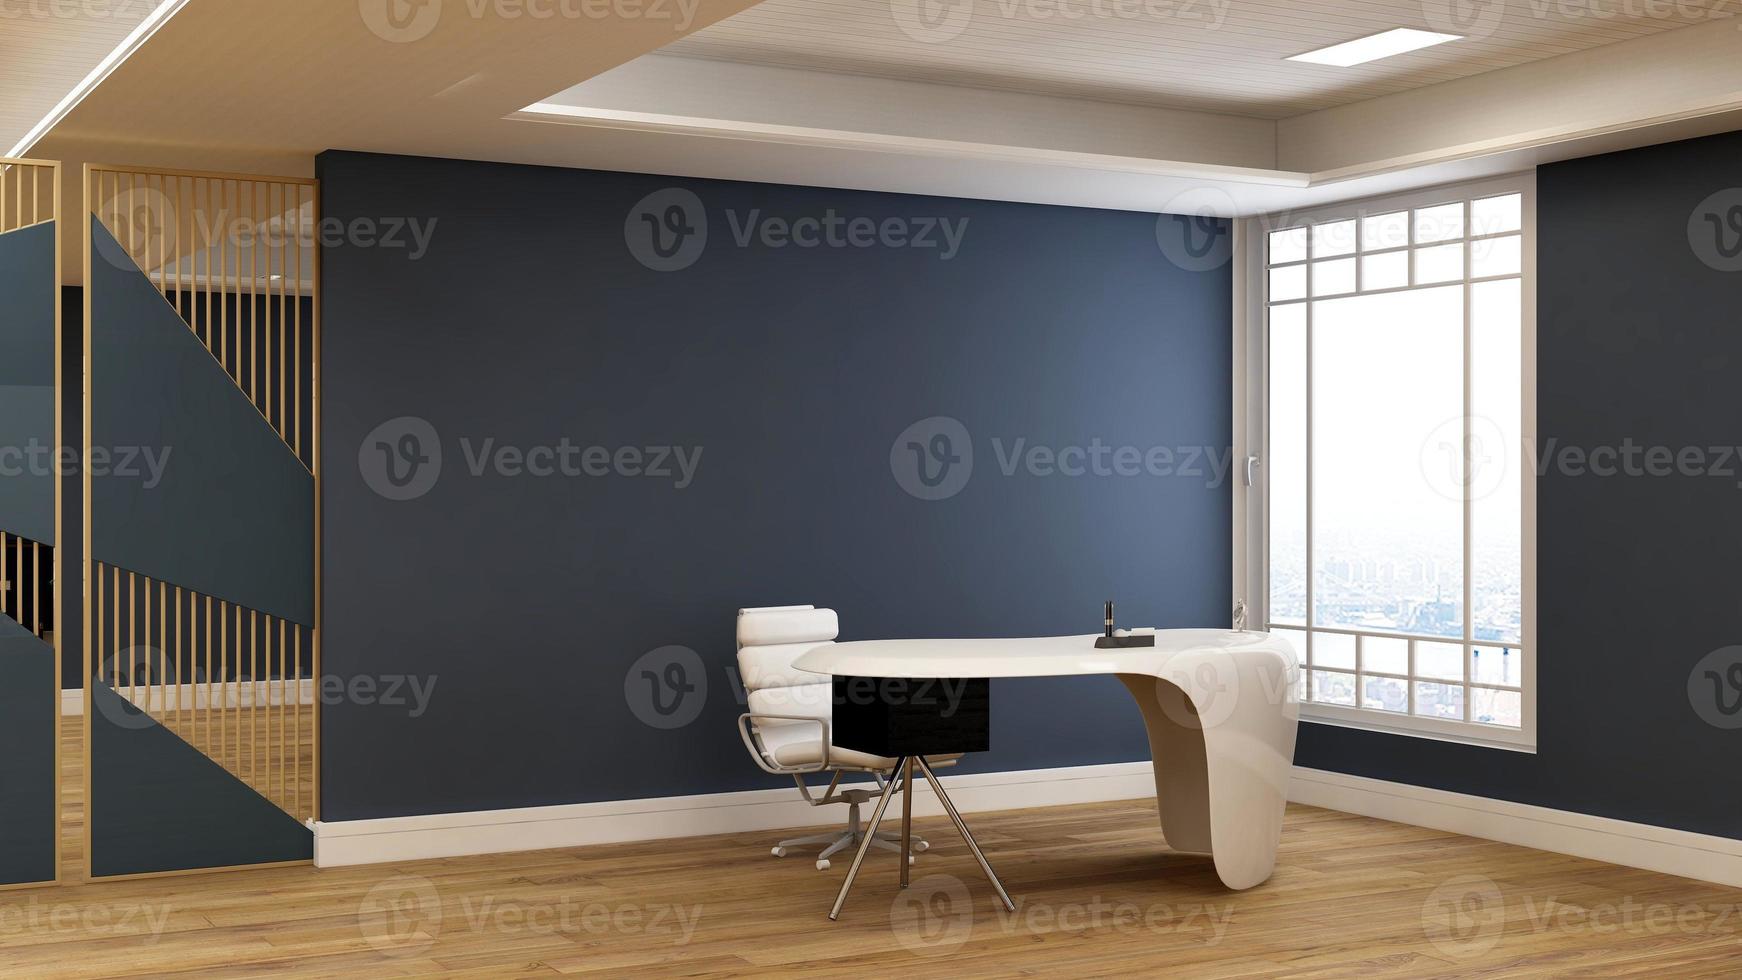 Sala de gerente de oficina de negocios moderna de renderizado 3d con interior de diseño 3d para maqueta de logotipo de pared de empresa foto